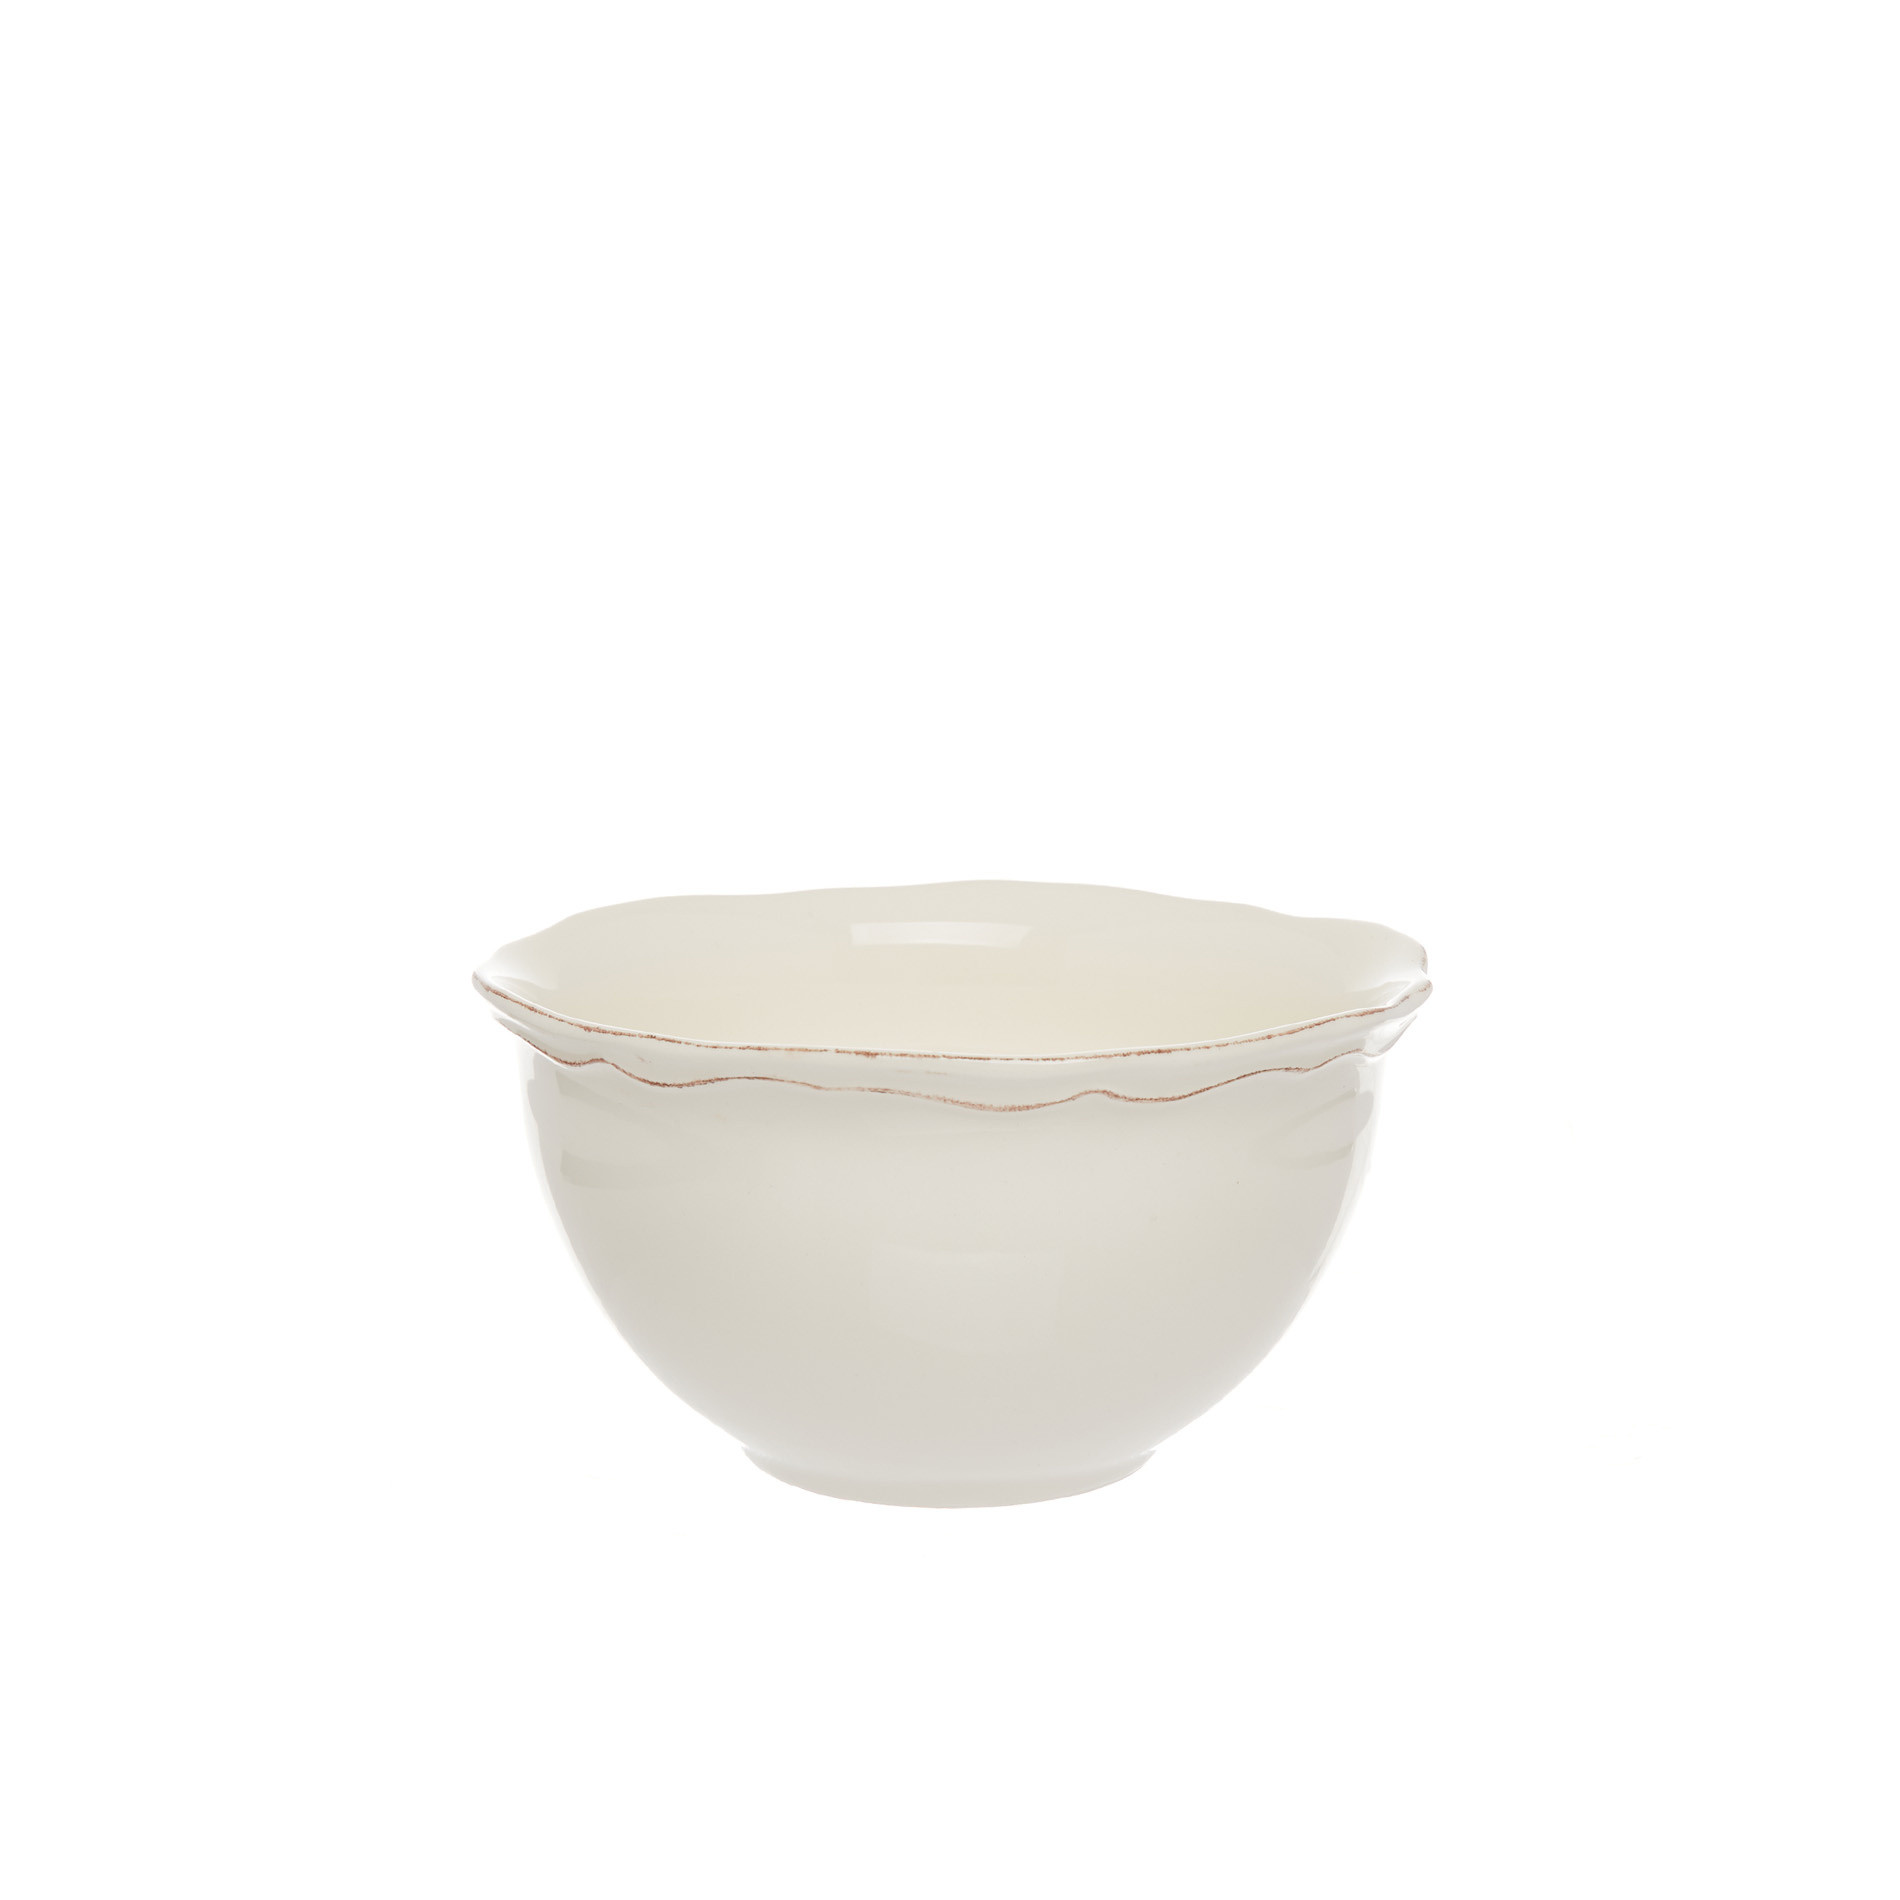 Dona Maria small ceramic bowl, White Cream, large image number 0